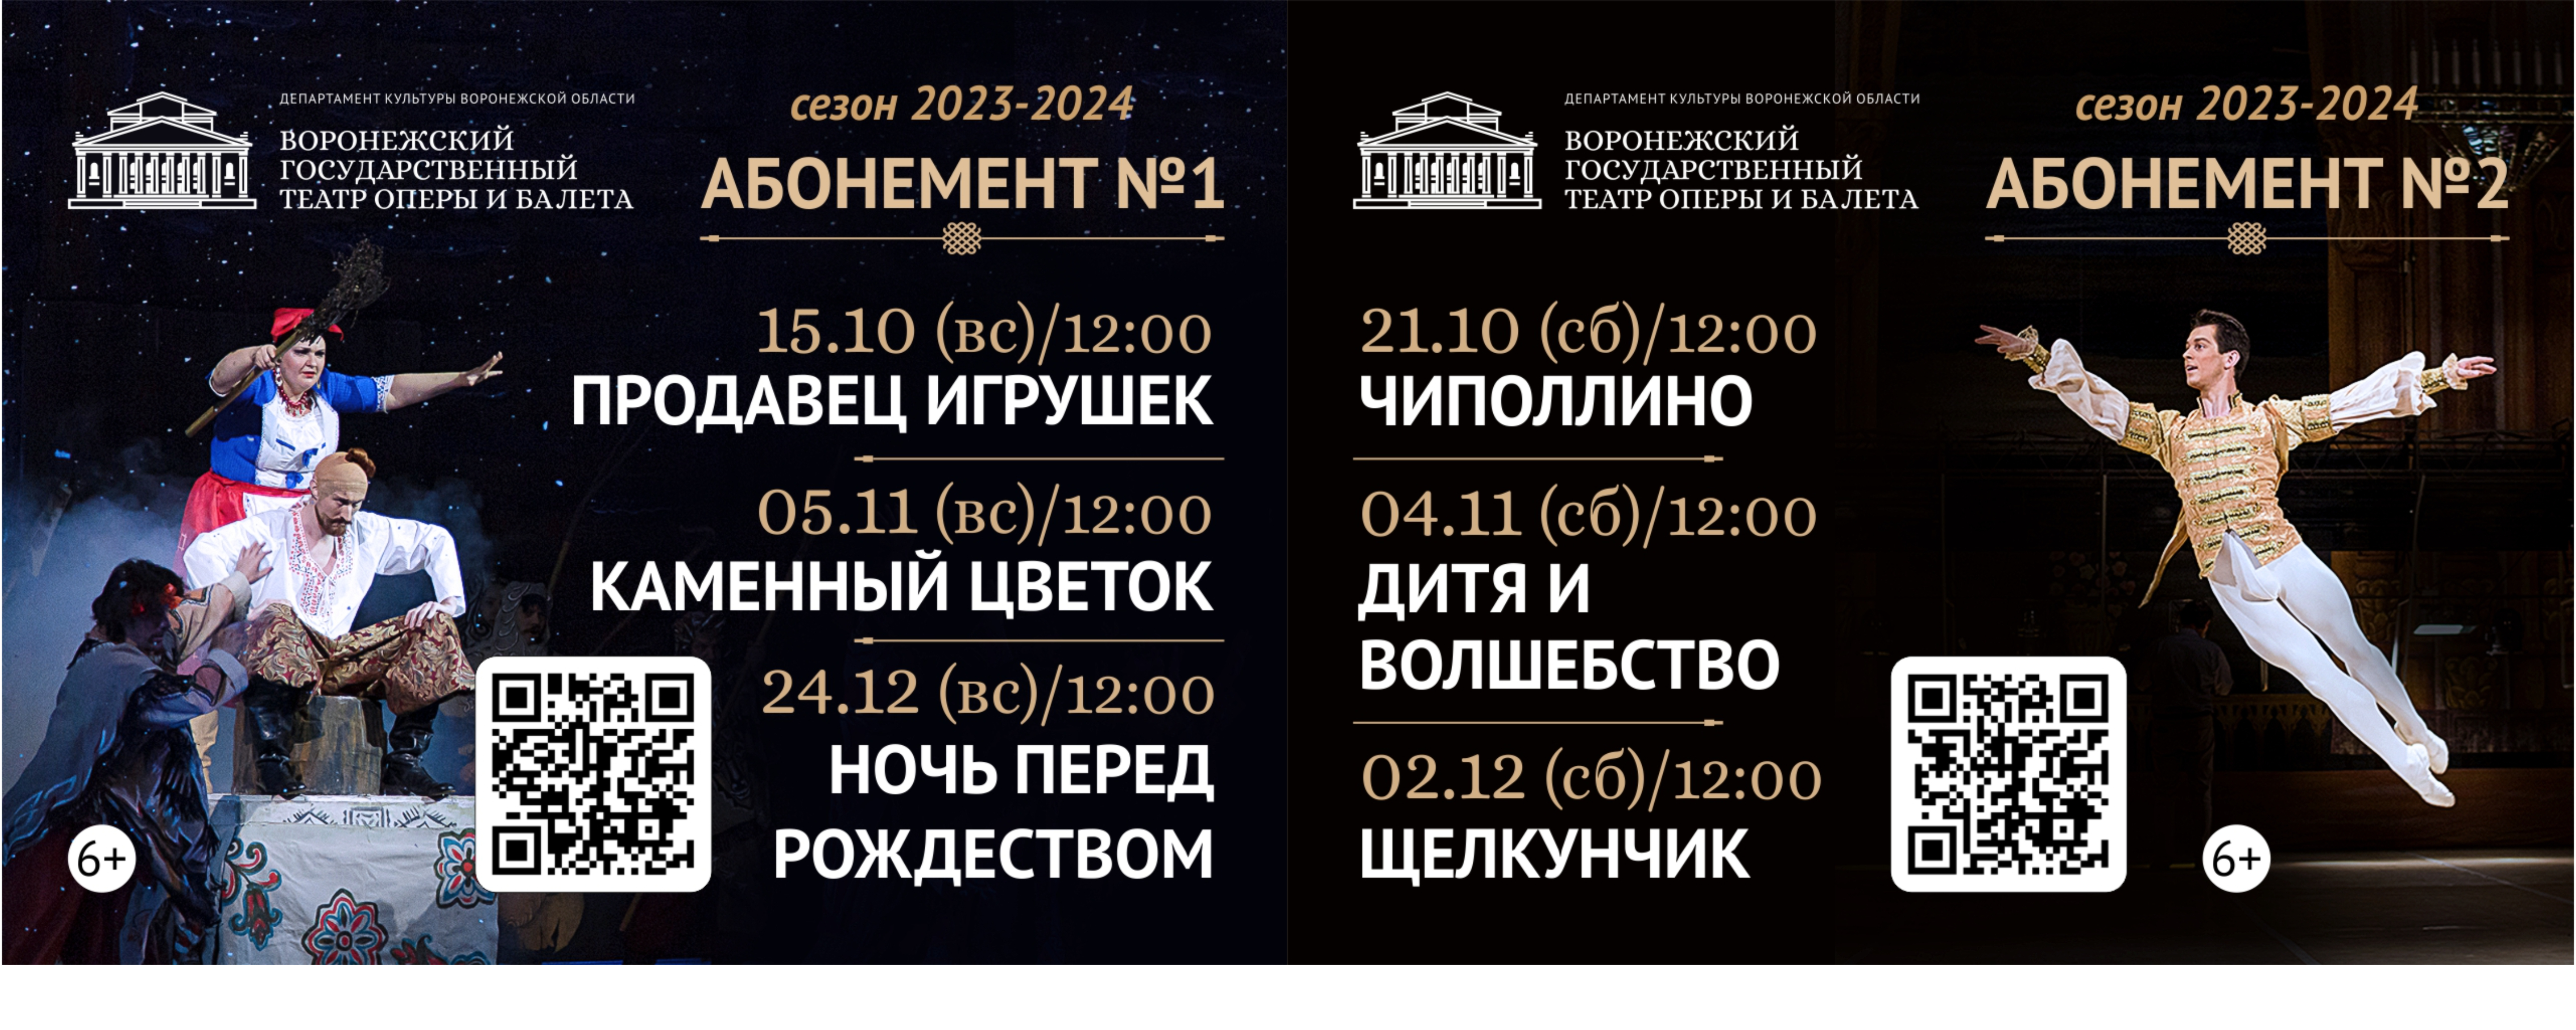 Афиша воронеж театры апрель 2024